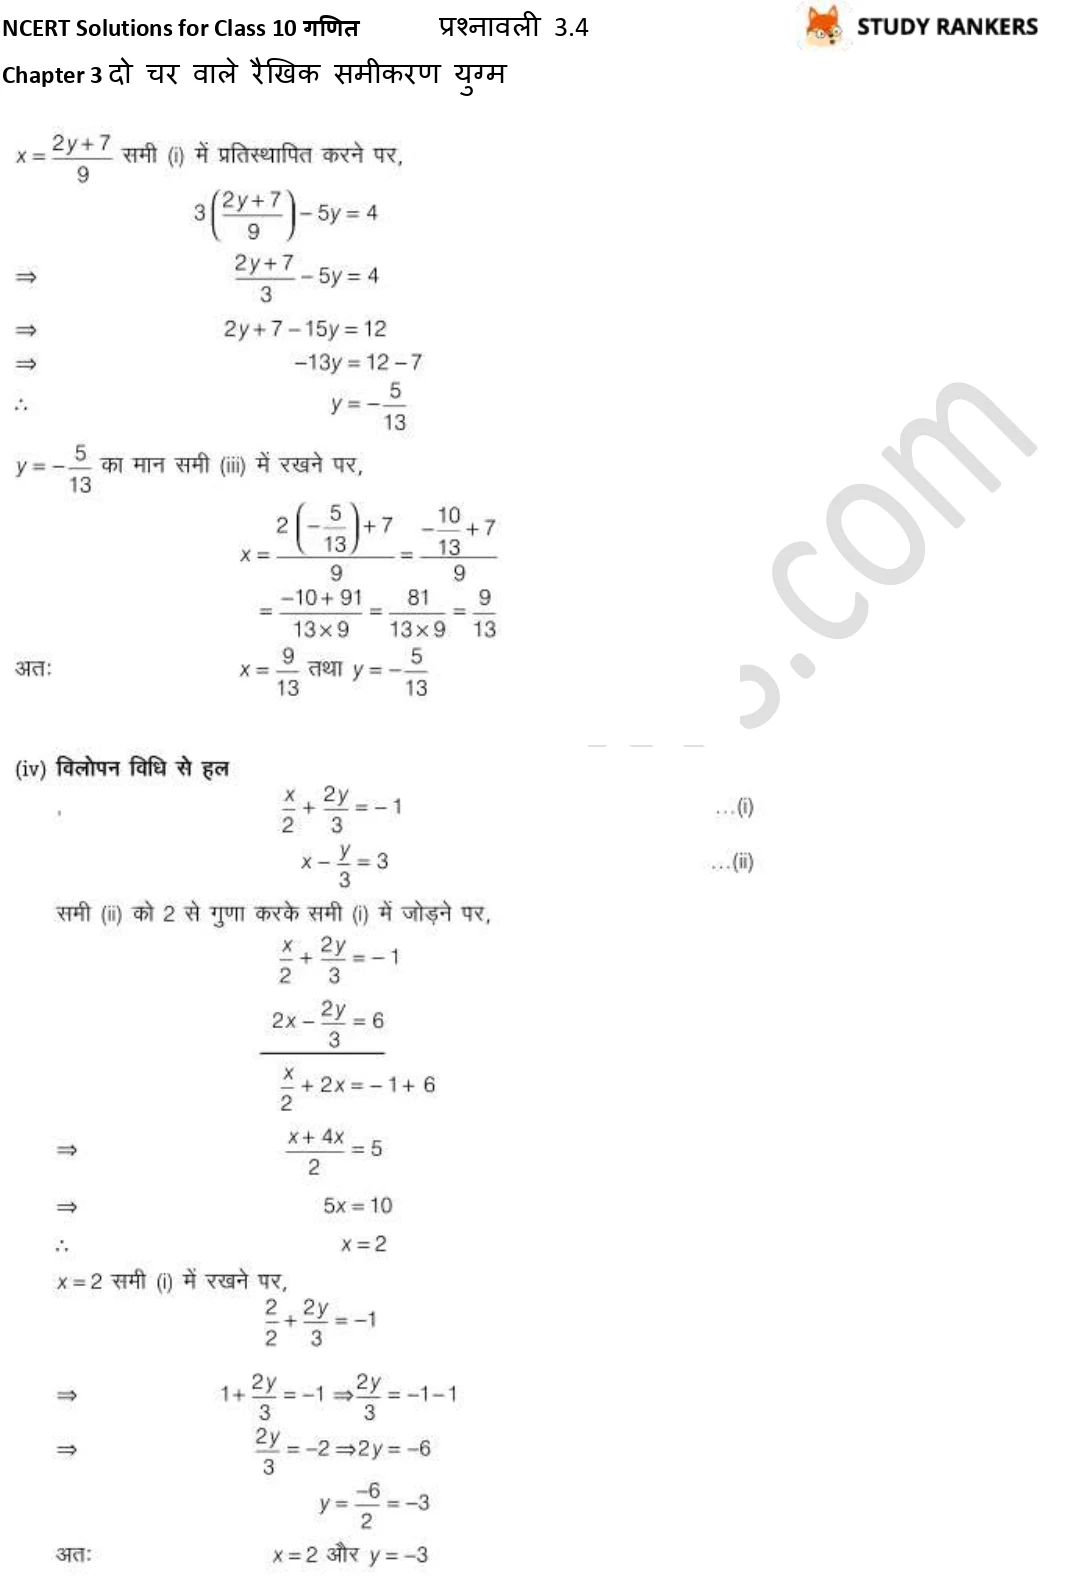 NCERT Solutions for Class 10 Maths Chapter 3 दो चर वाले रैखिक समीकरण युग्म प्रश्नावली 3.4 Part 5